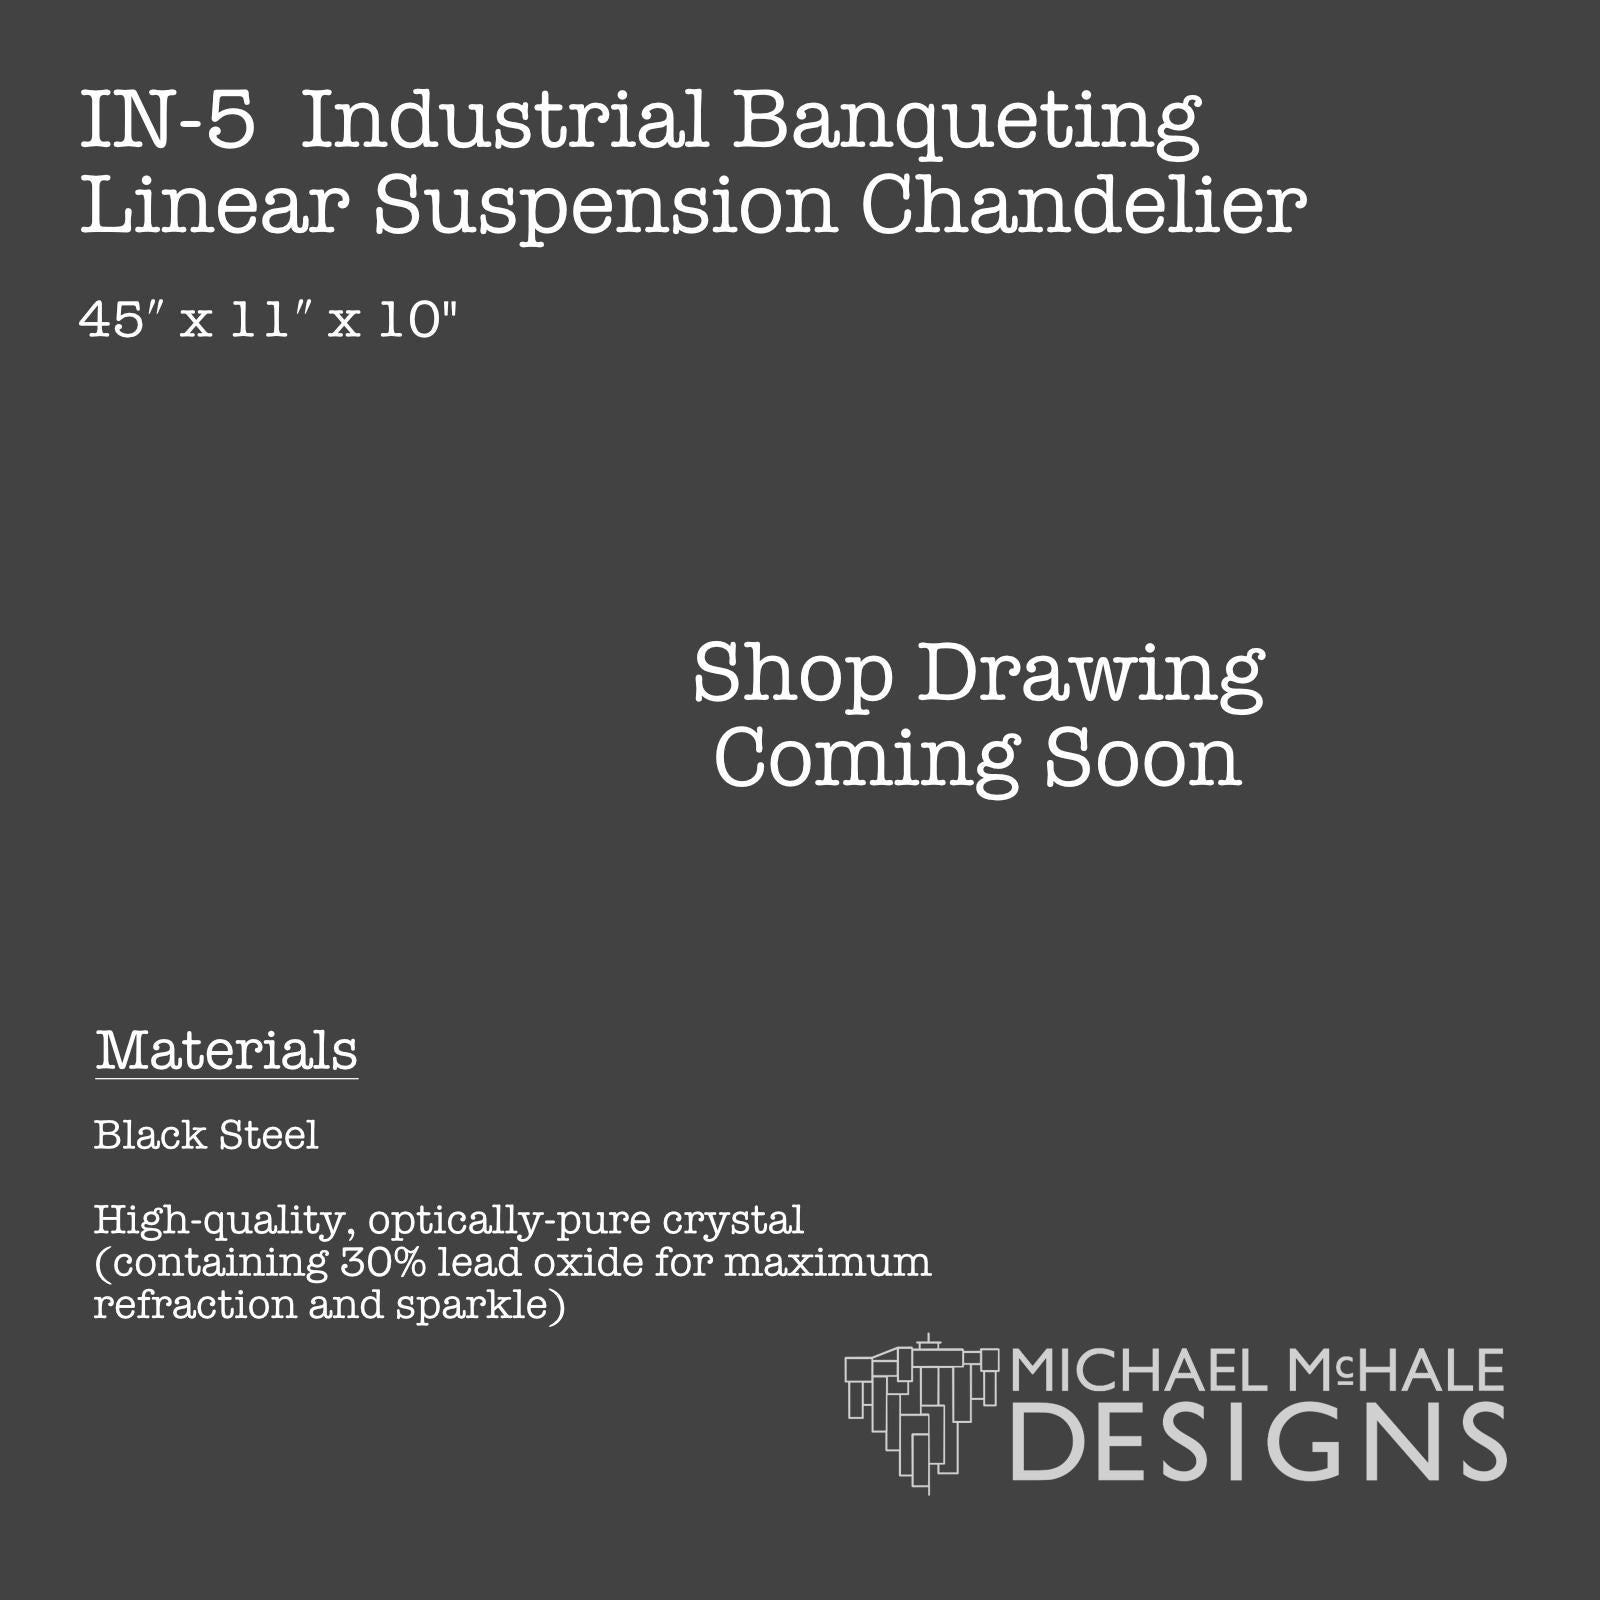 Contemporary Industrial Banqueting Linear Suspension Chandelier